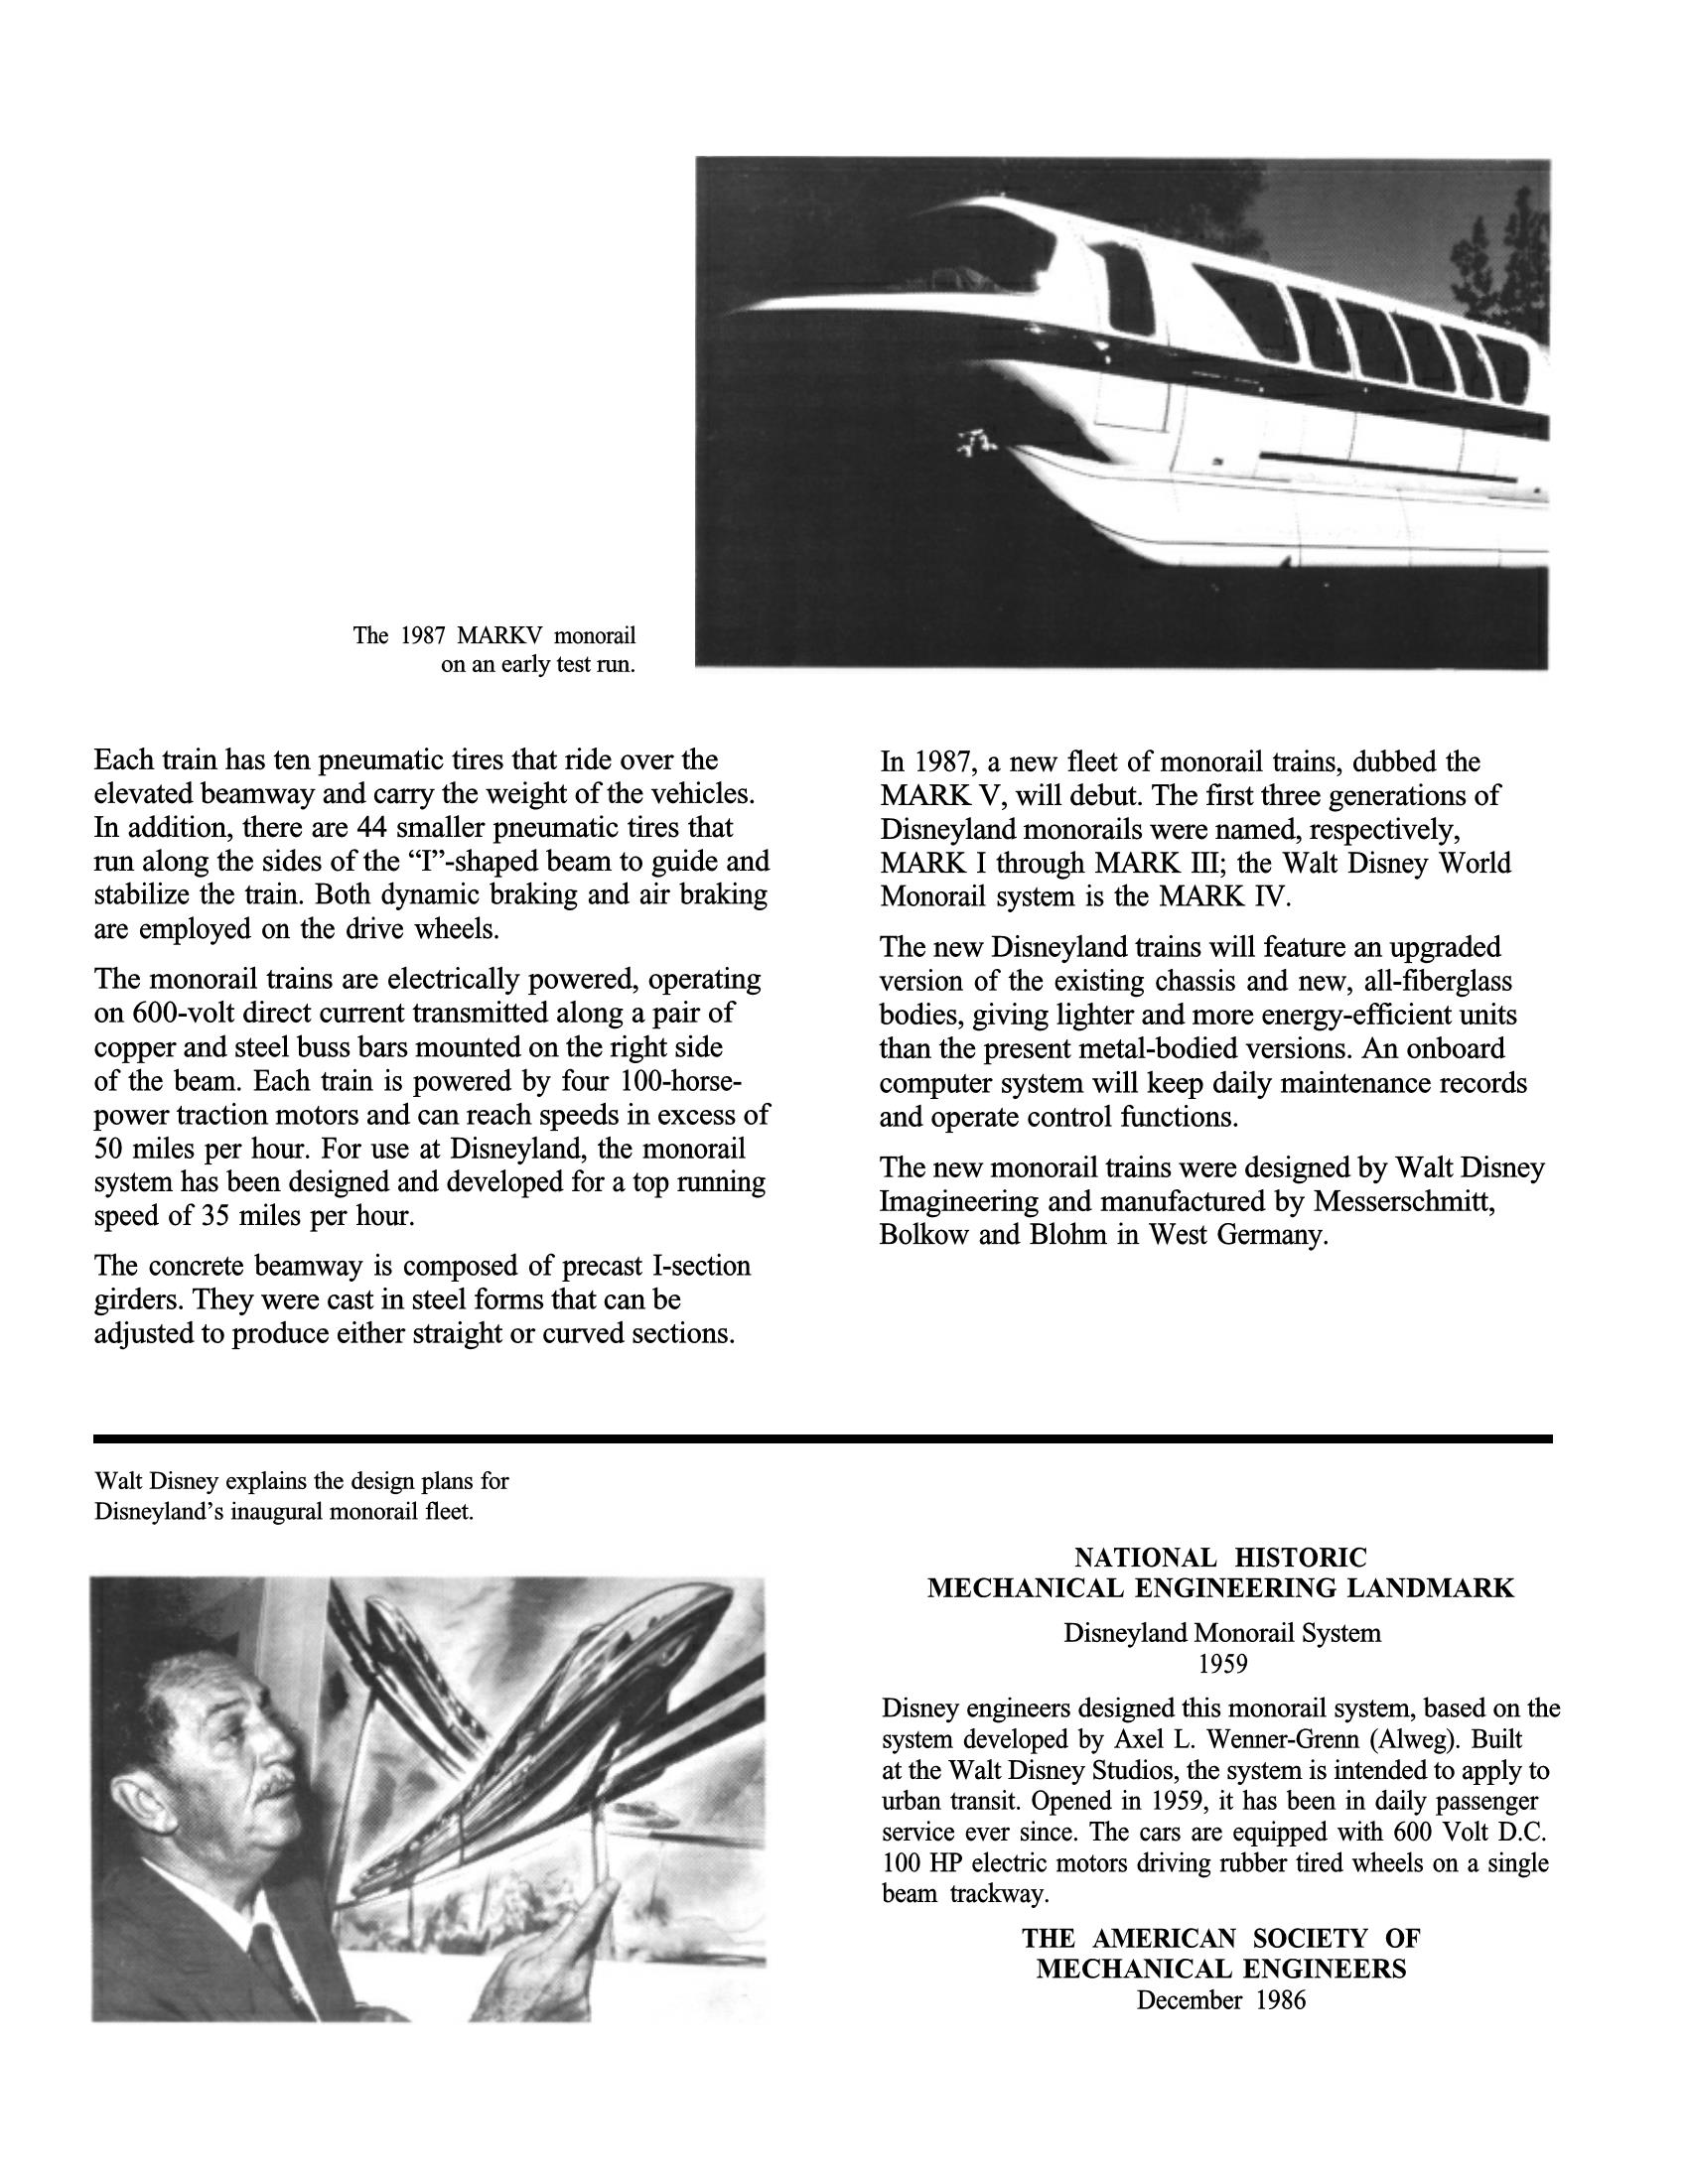 Disneyland Monorail System 1959 ASME Page 3